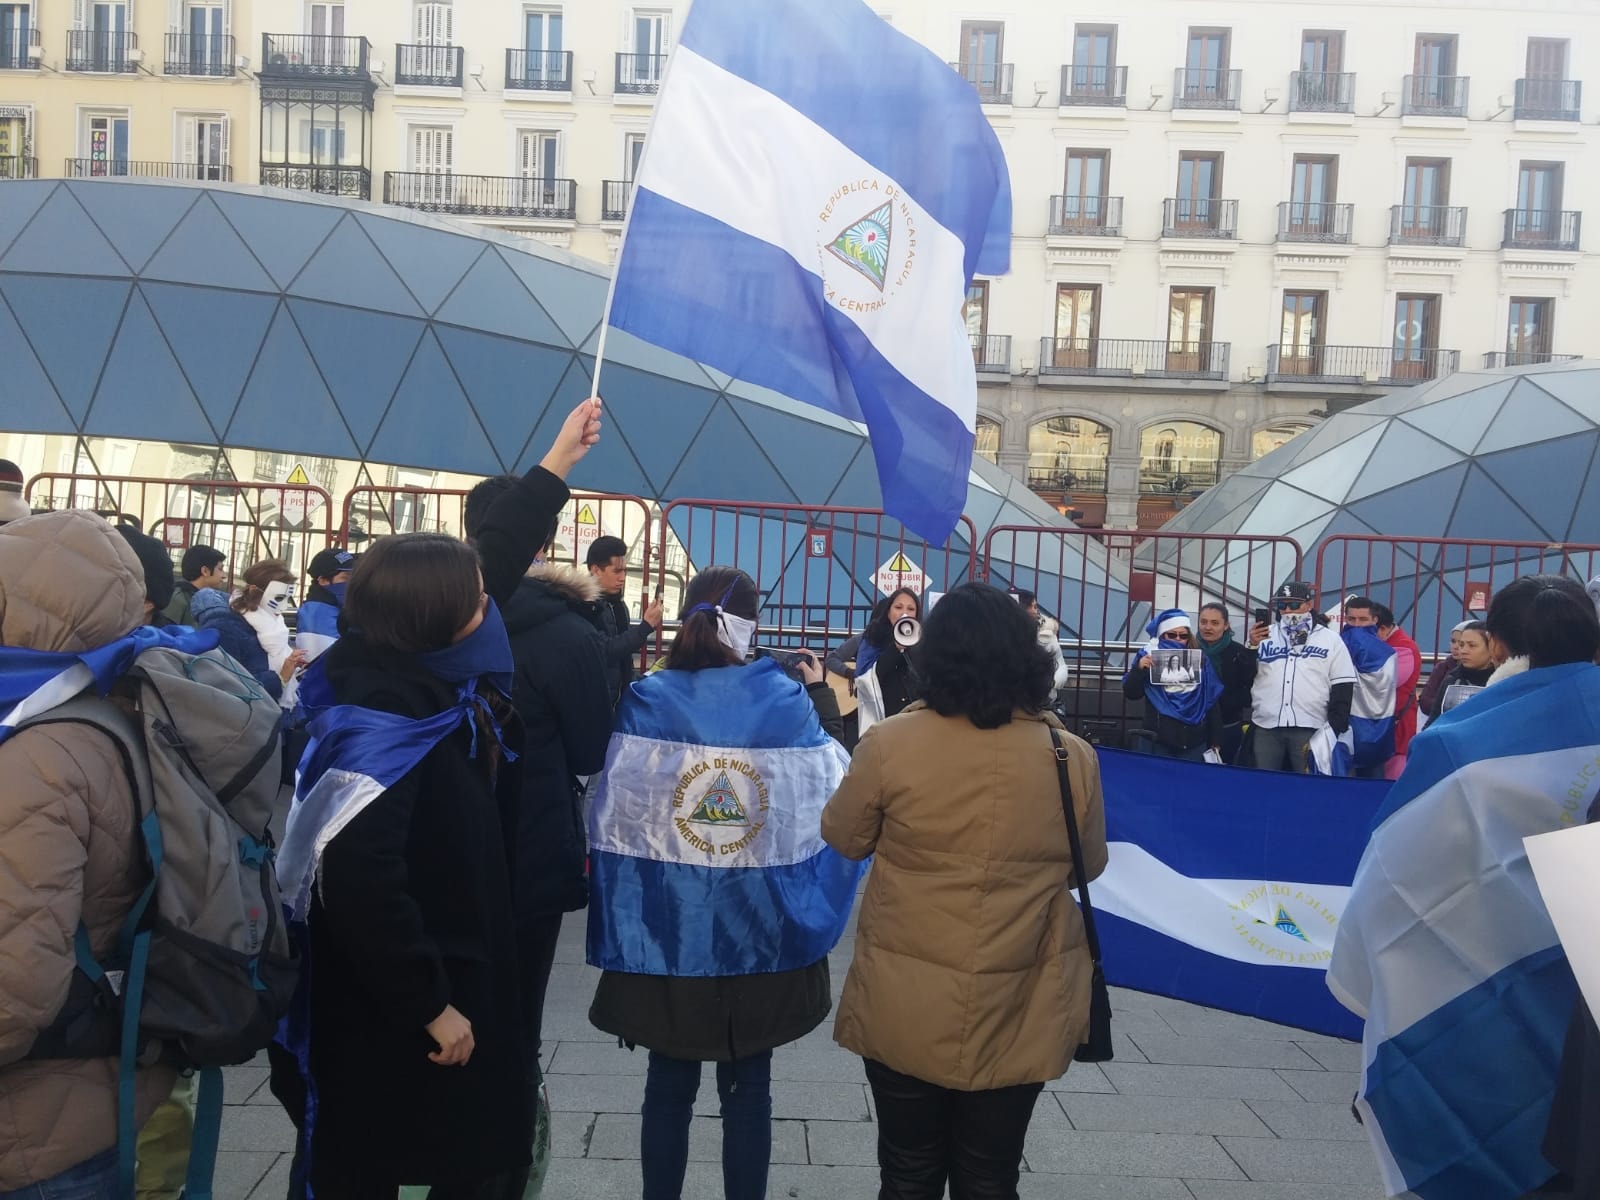 Nicaragüenses en Madrid boicotean concierto promovido por el régimen de Daniel Ortega. Foto ilustrativa/SOS Nicaragua Madrid